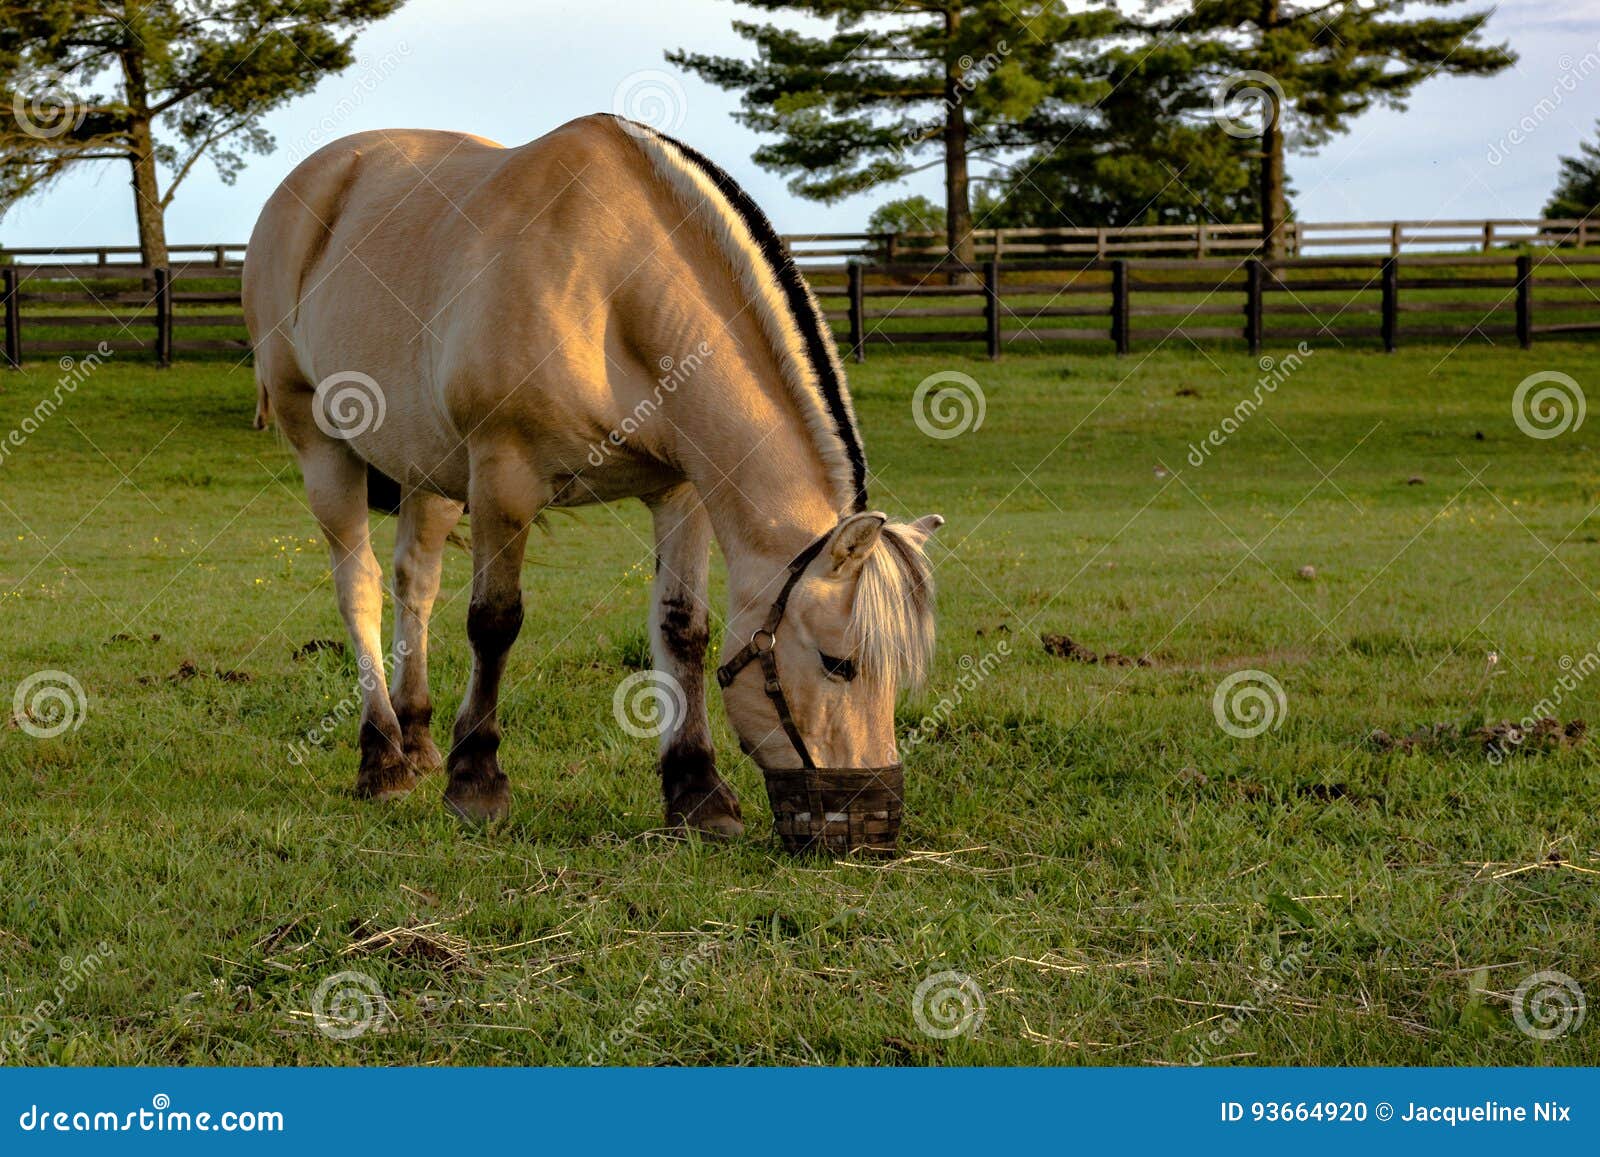 horse wearing a grazing muzzle